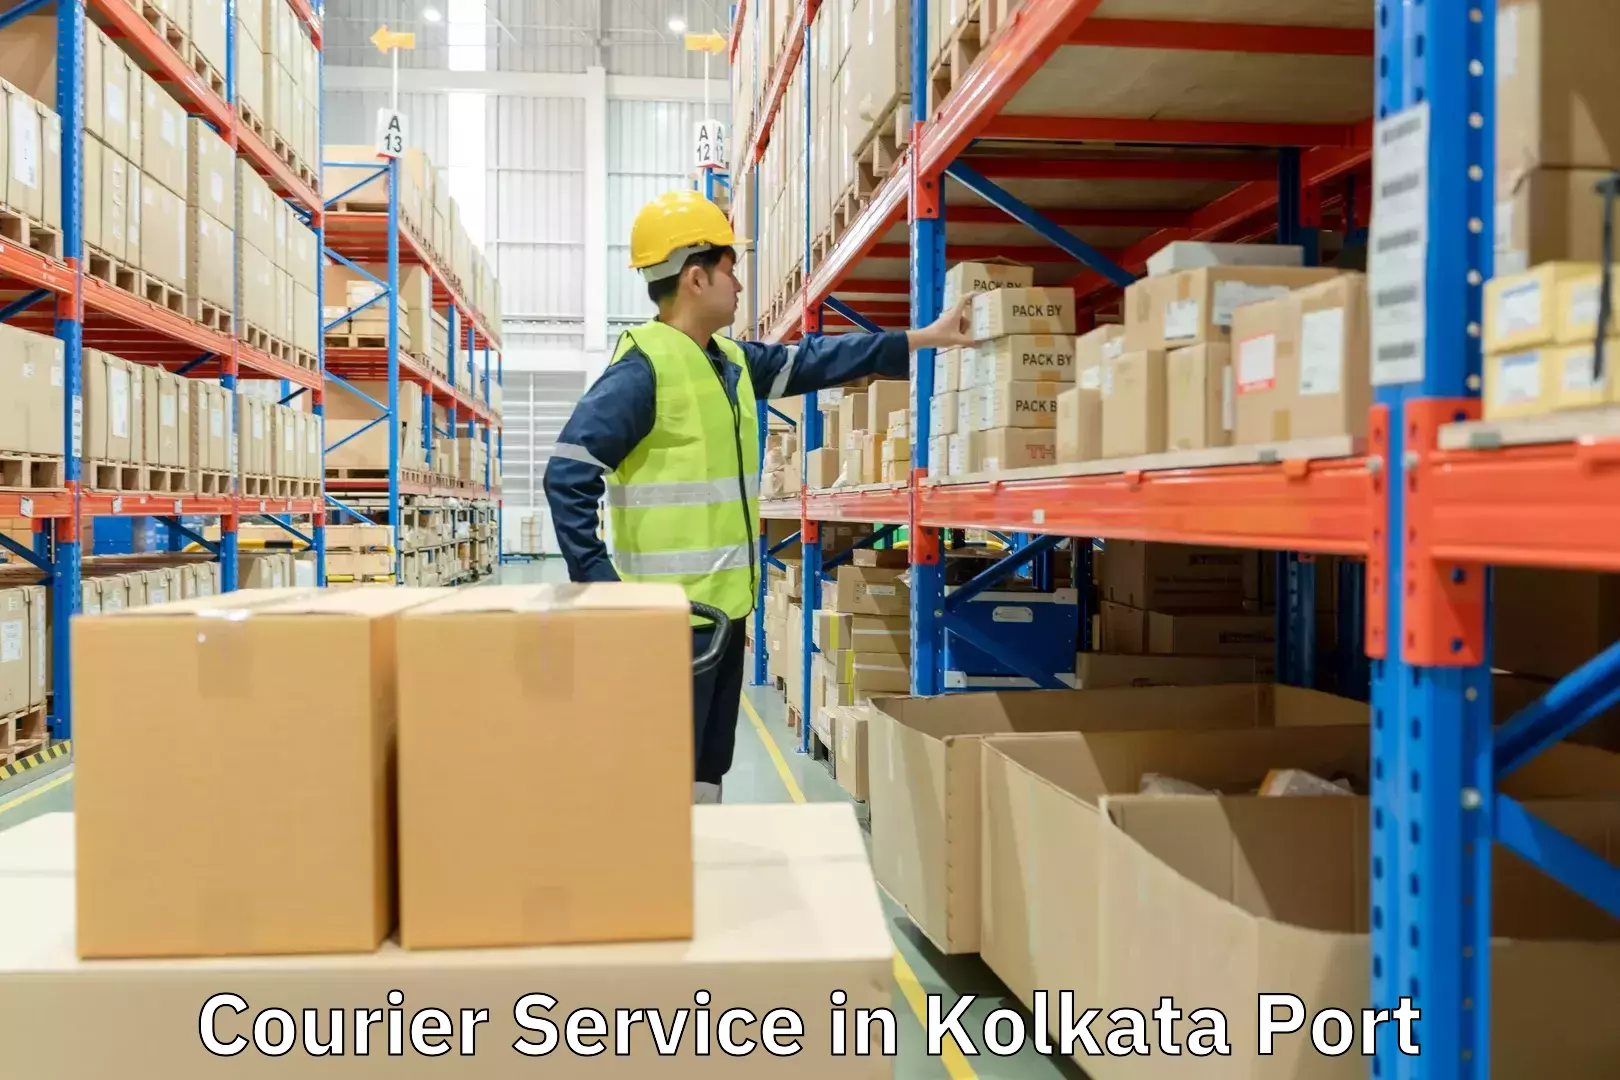 Short distance delivery in Kolkata Port